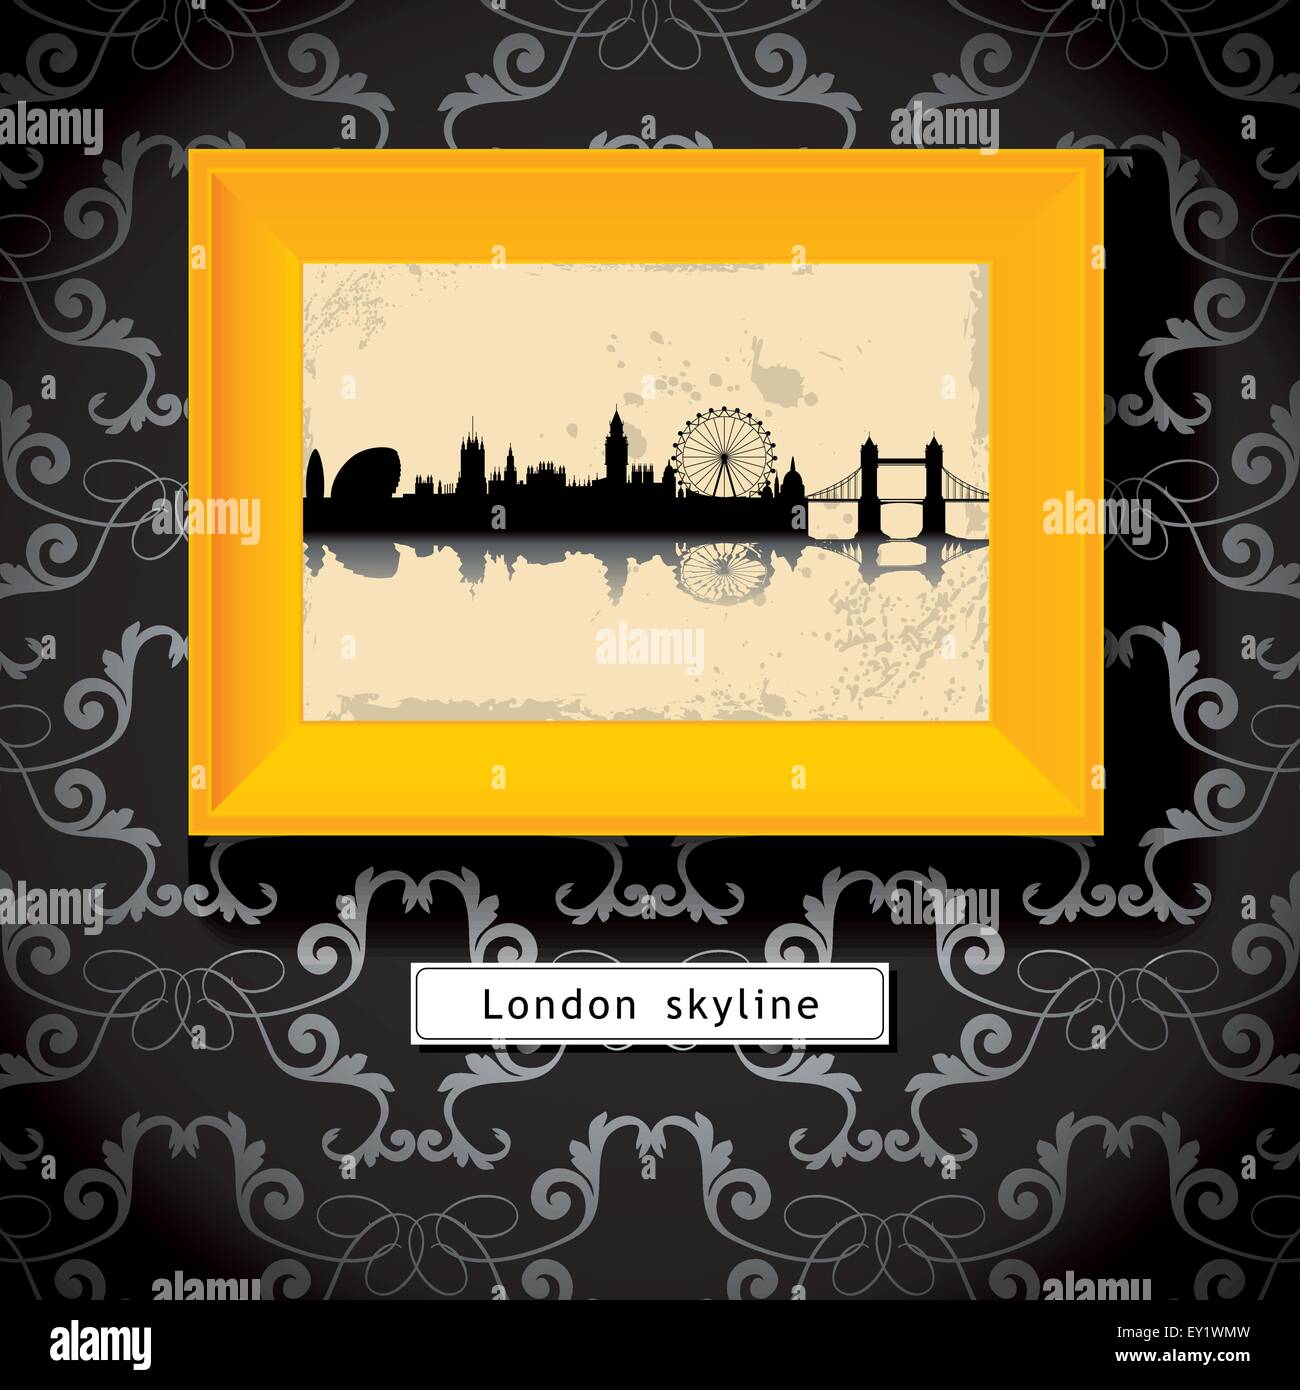 grunge London skyline in yellow photo frame - vector illustration Stock Vector